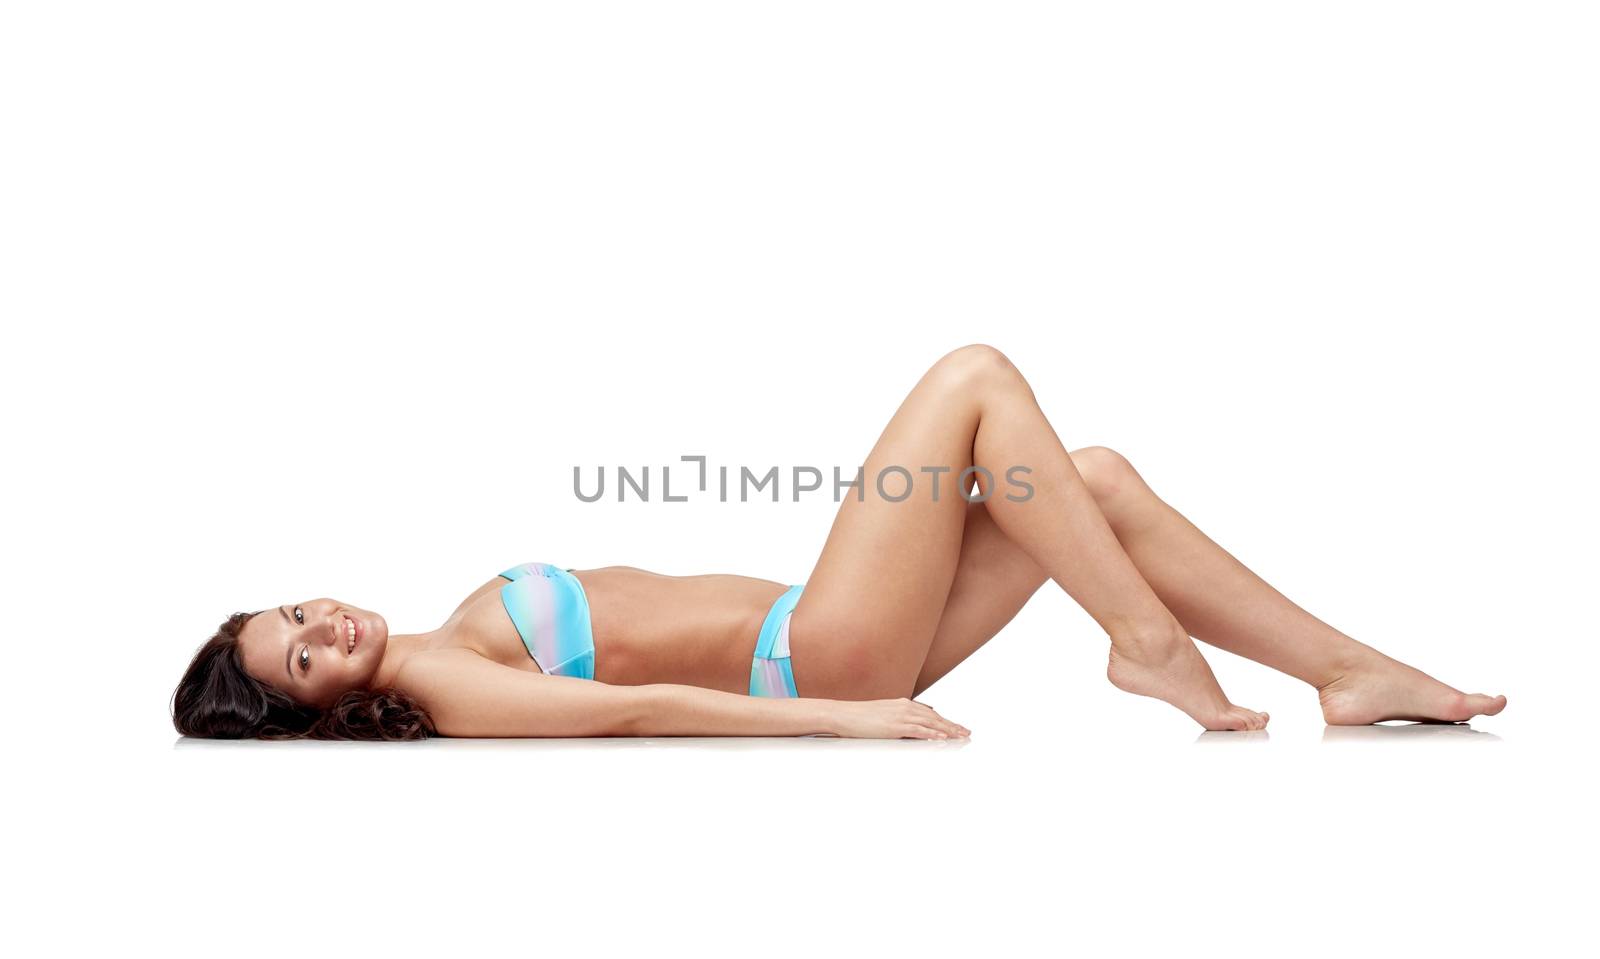 people, fashion, swimwear, summer and beach concept - happy young woman lying in bikini swimsuit